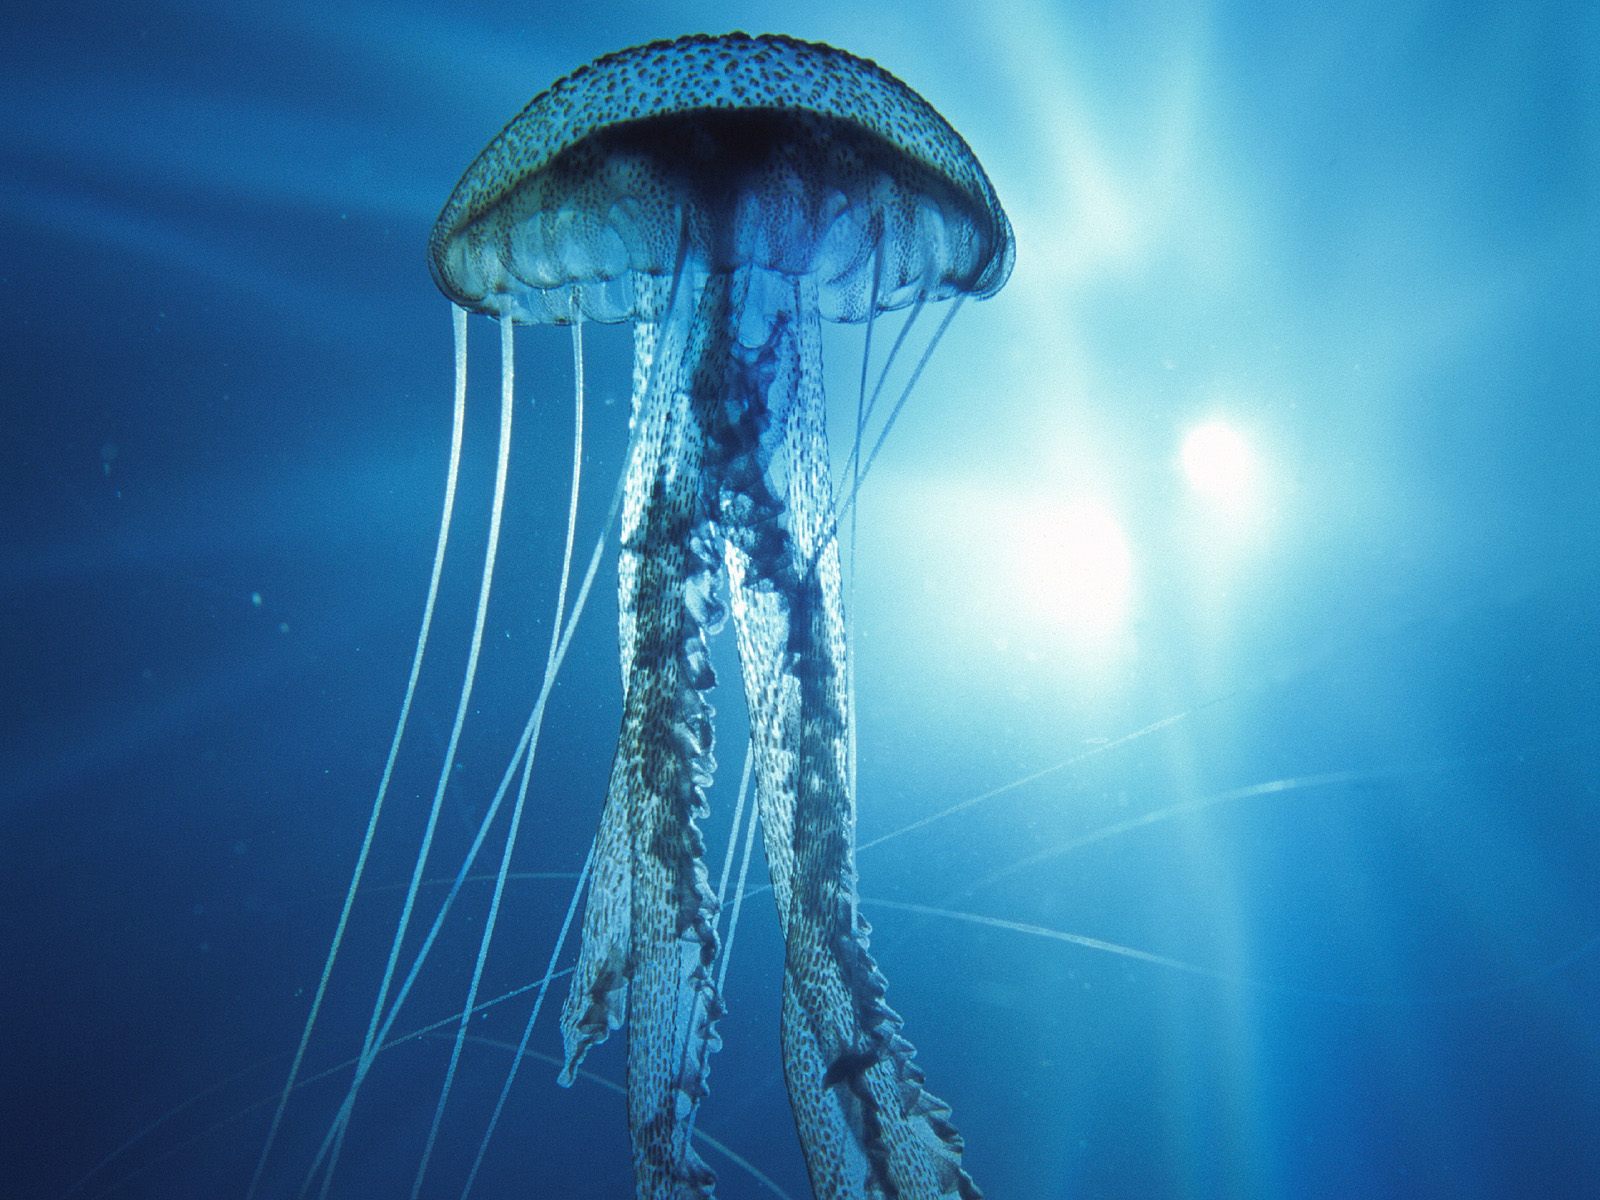 Electric Jellyfish2408918147 - Electric Jellyfish - Jellyfish, Fishy, Electric